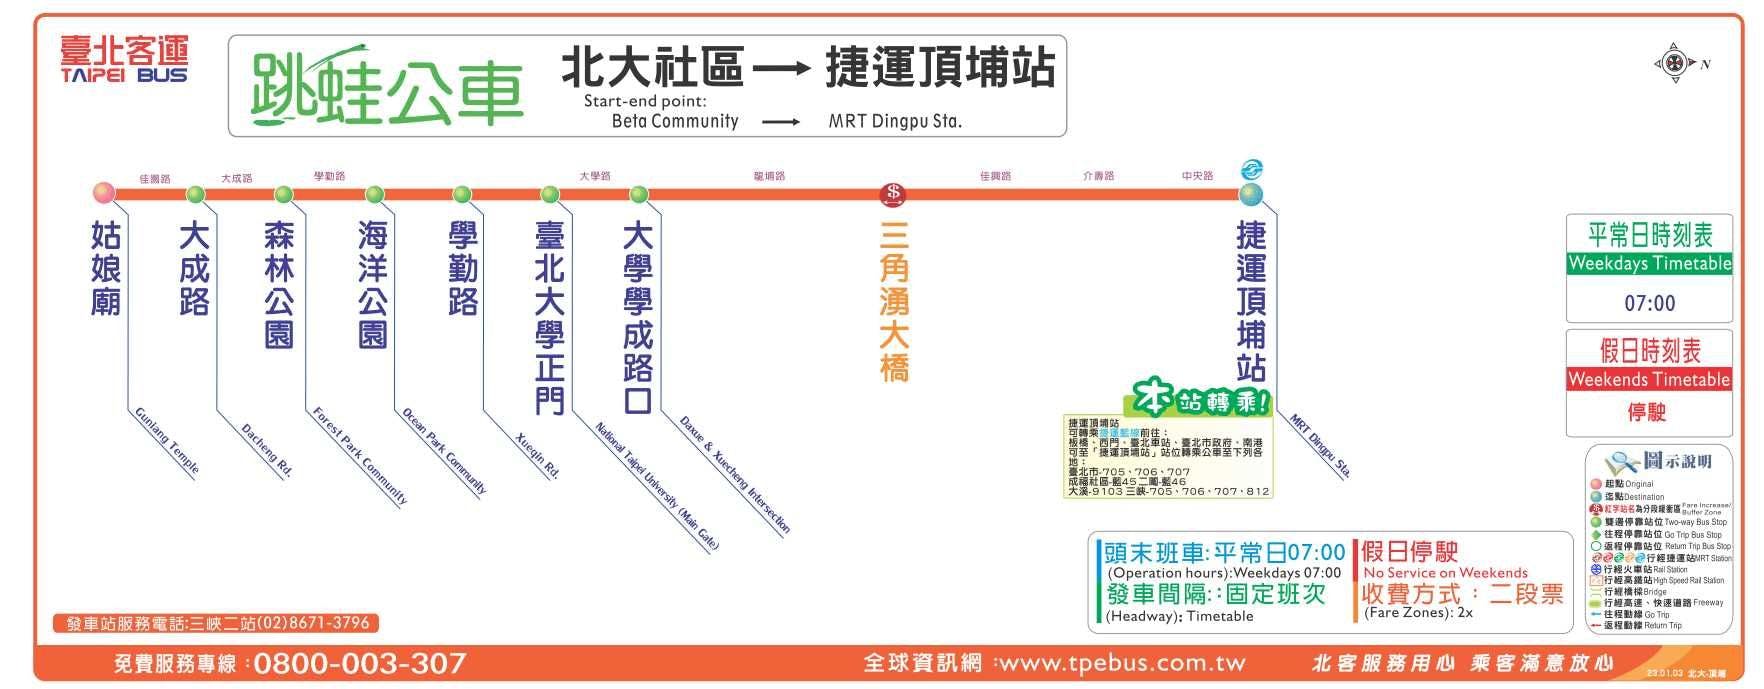 Beta Community - MRT Dingpu Sta.Route Map-新北市 Bus